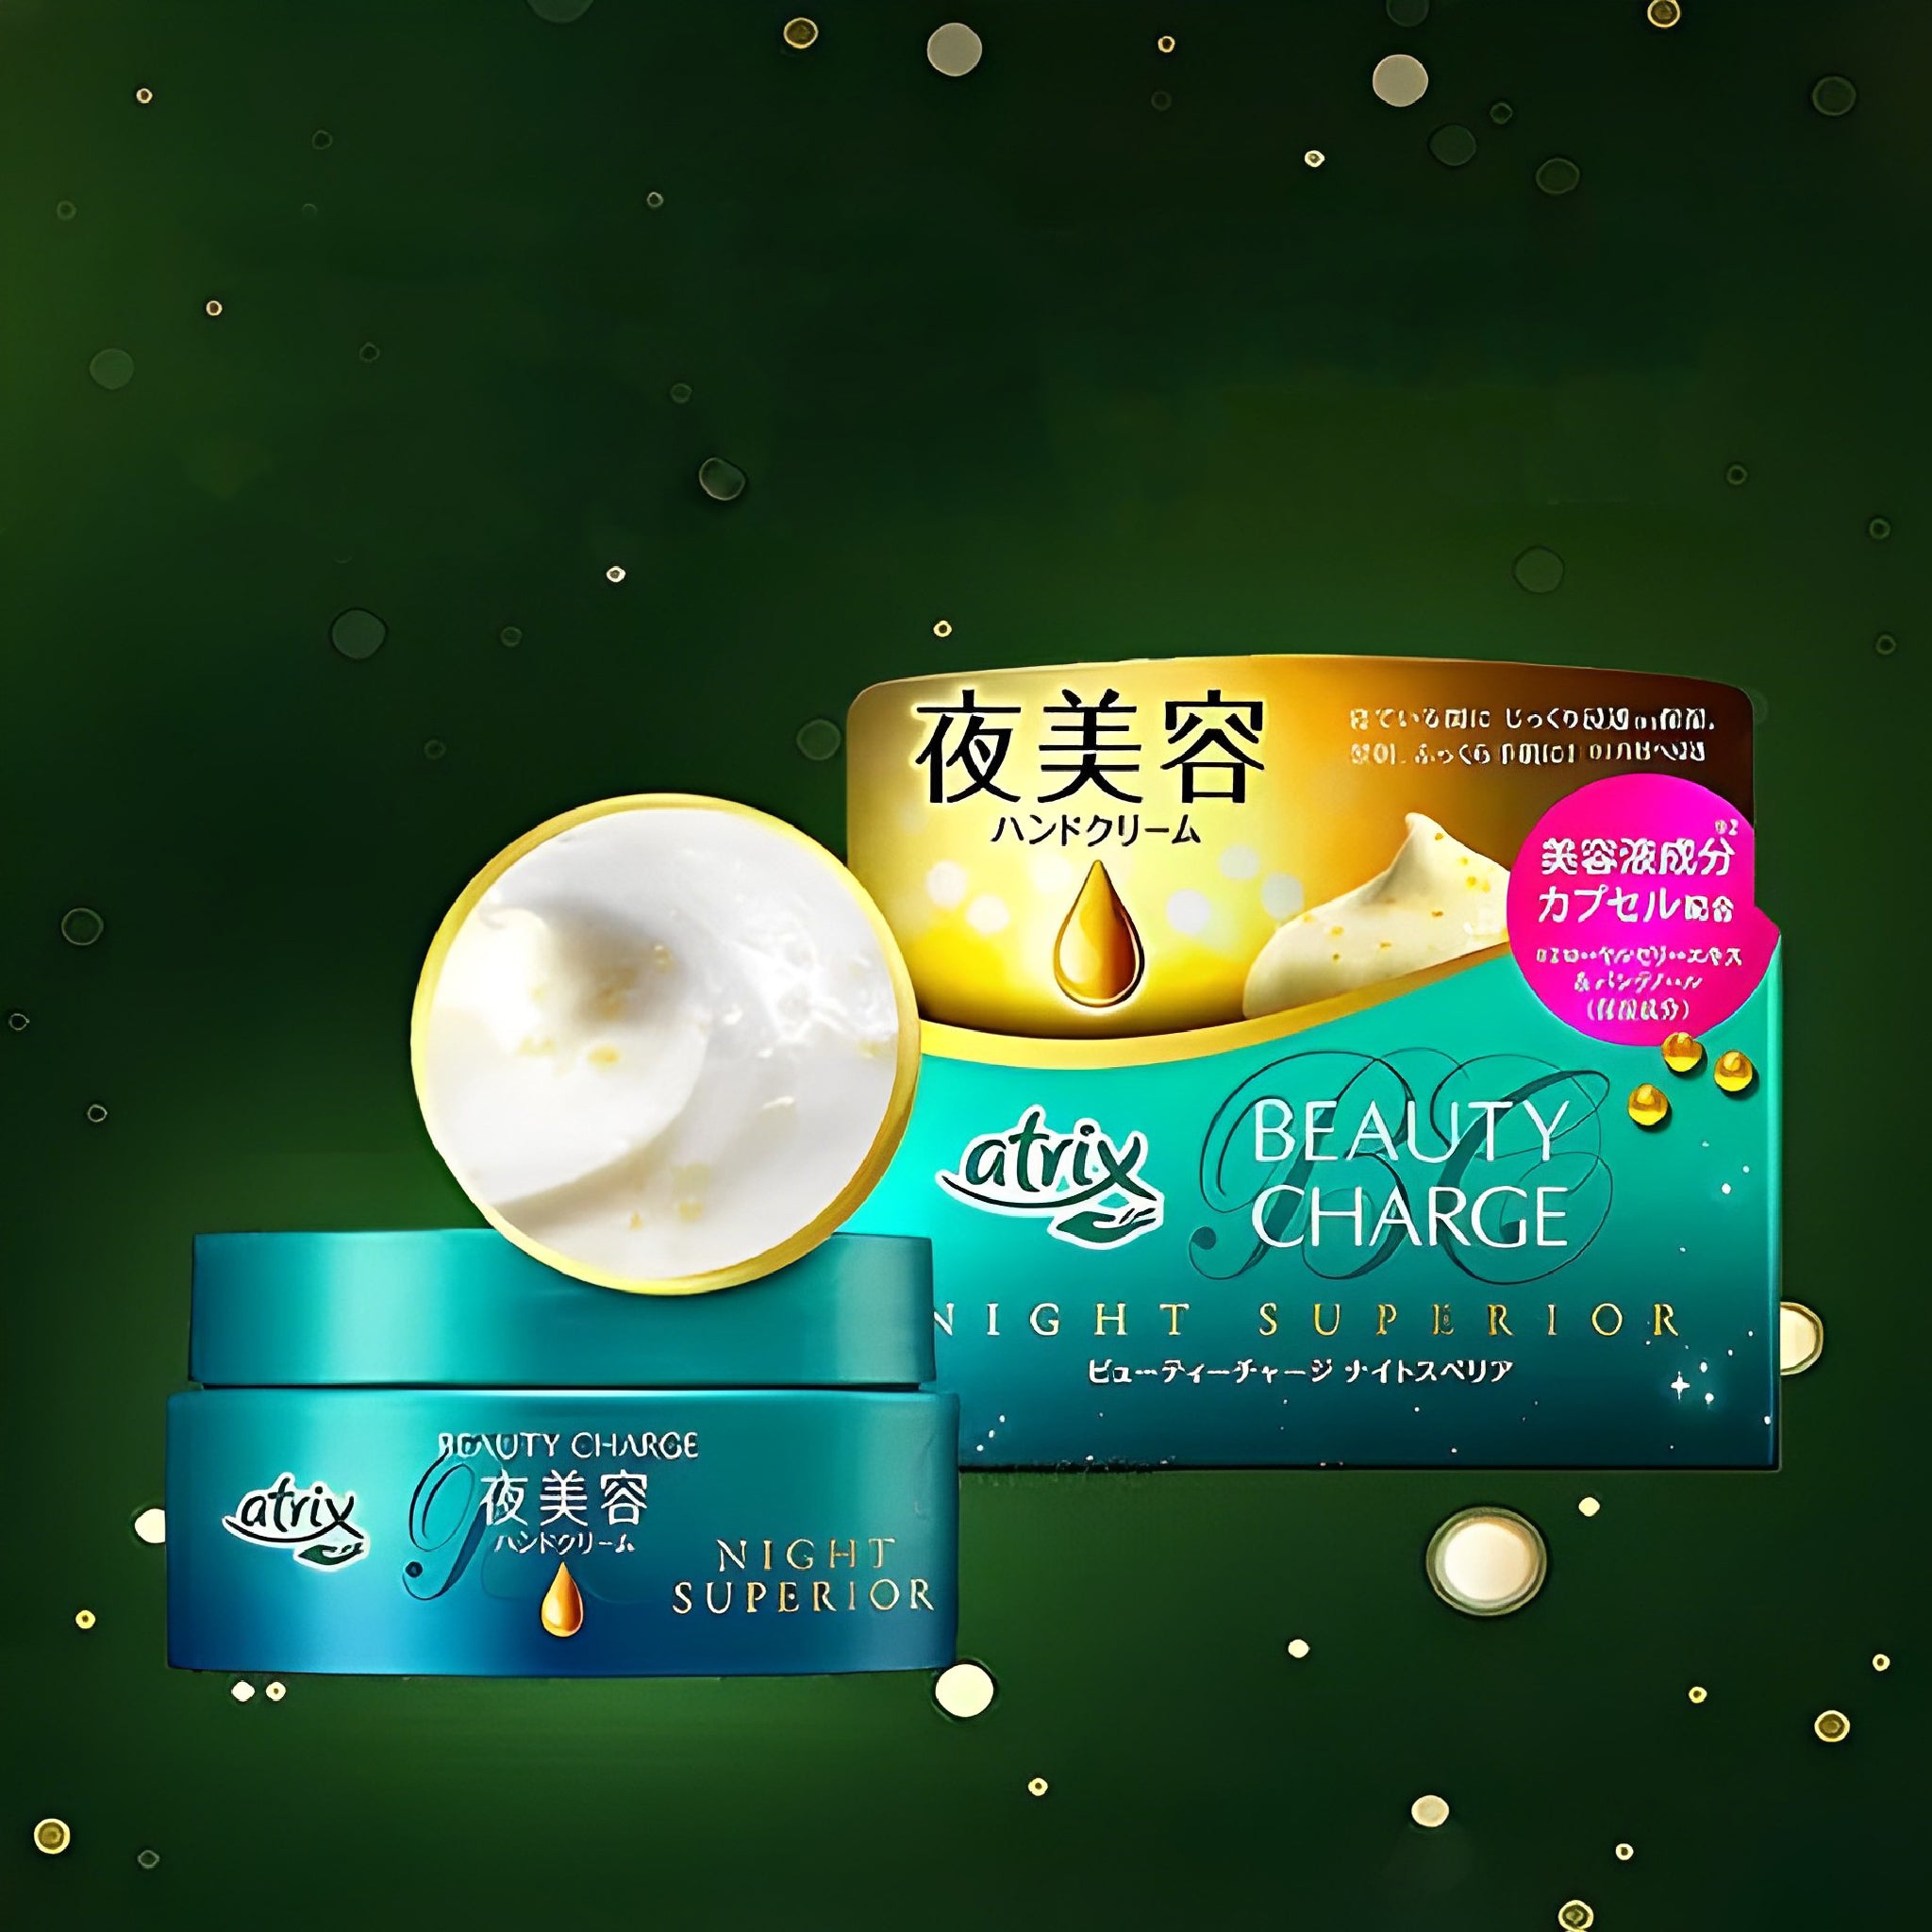 KAO Atrix Beauty Charge Night Superior Hand Cream 98g